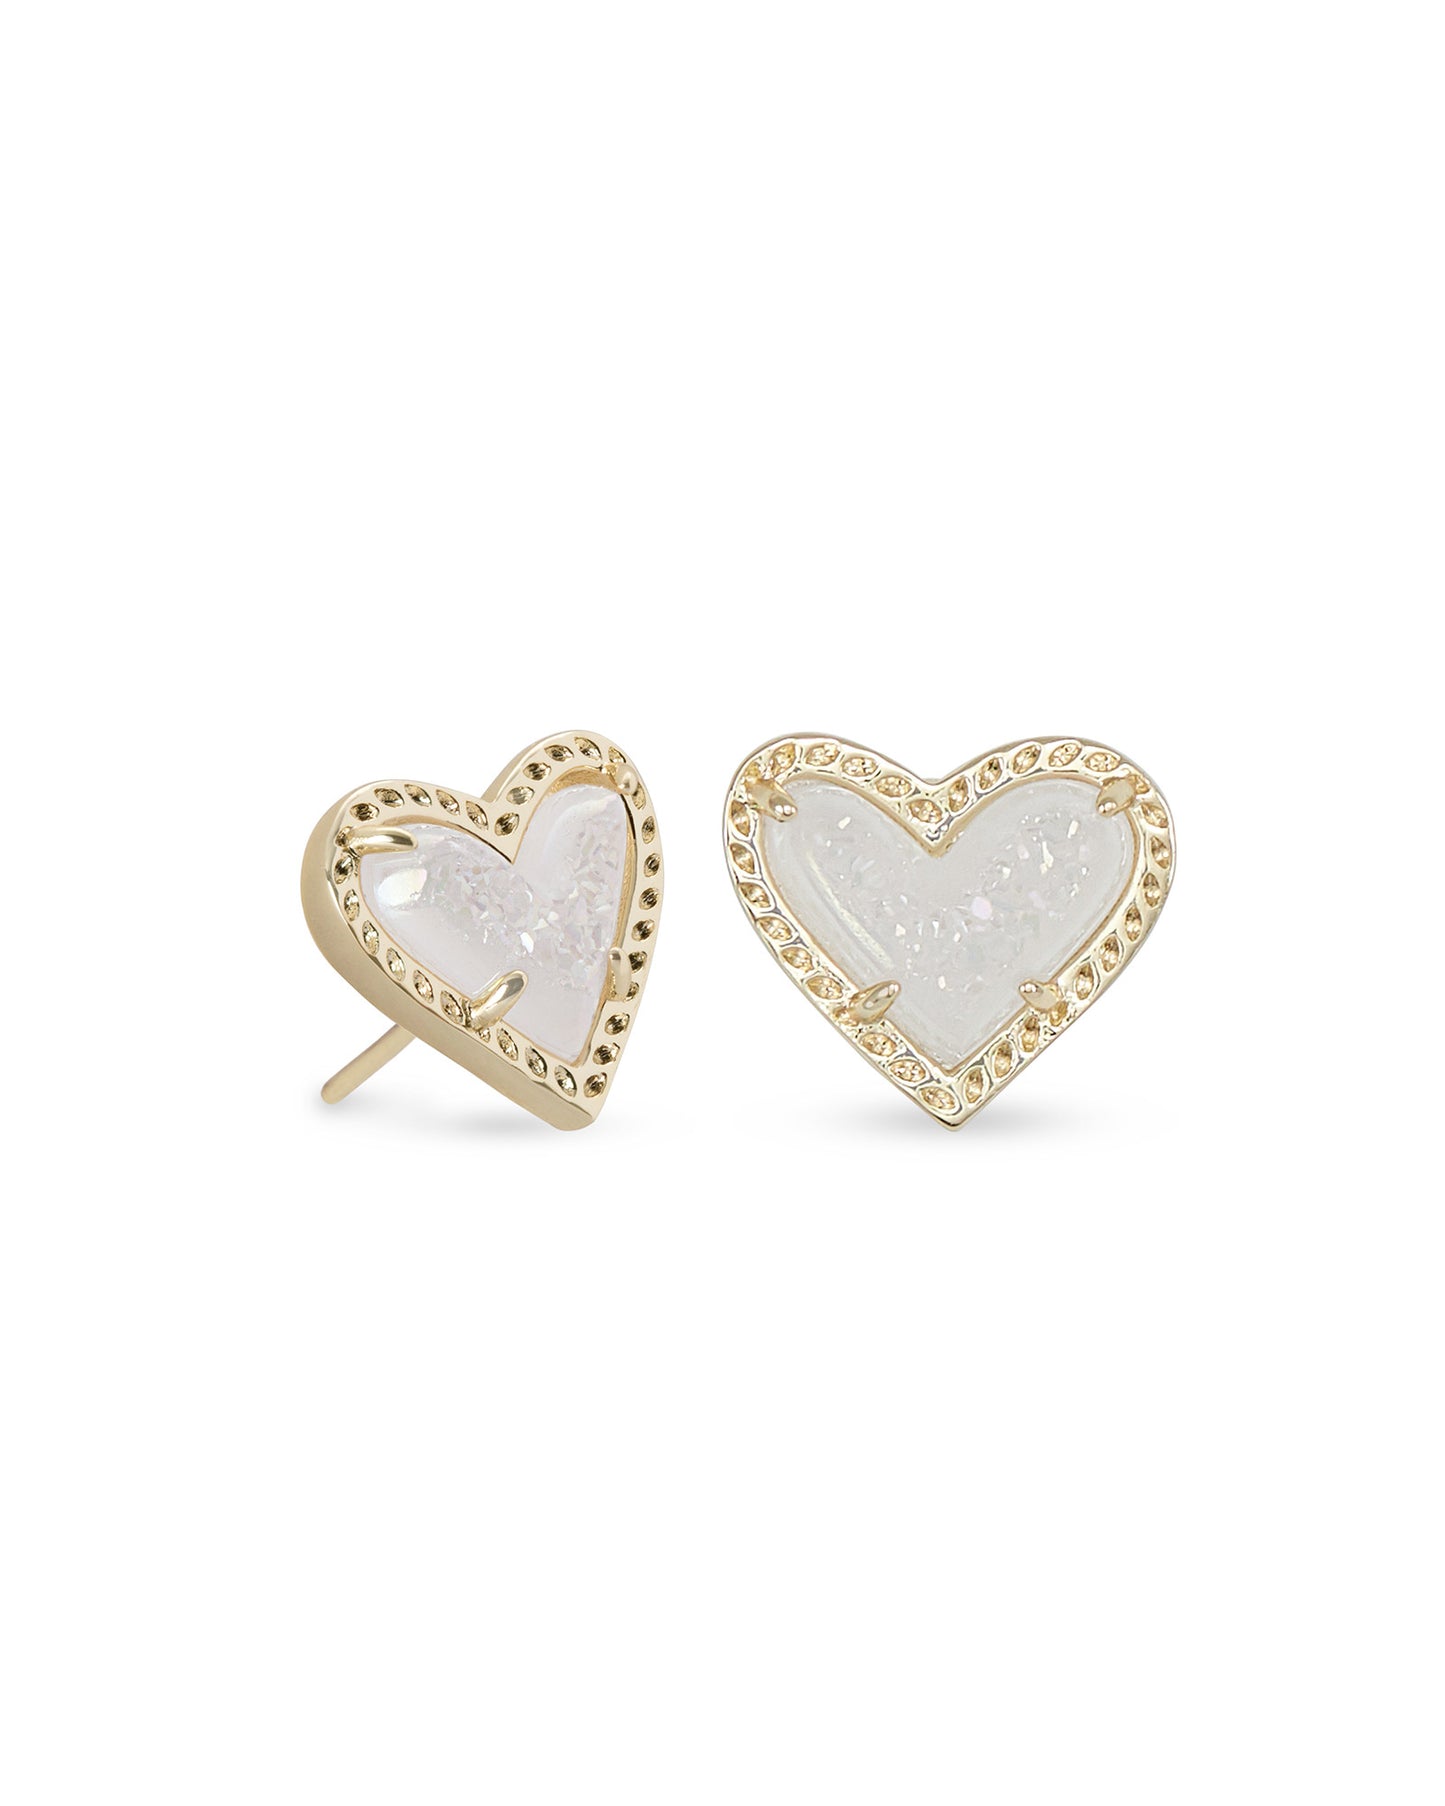 Kendra Scott Ari Heart Stud Earrings - Gold Iridescent Drusy